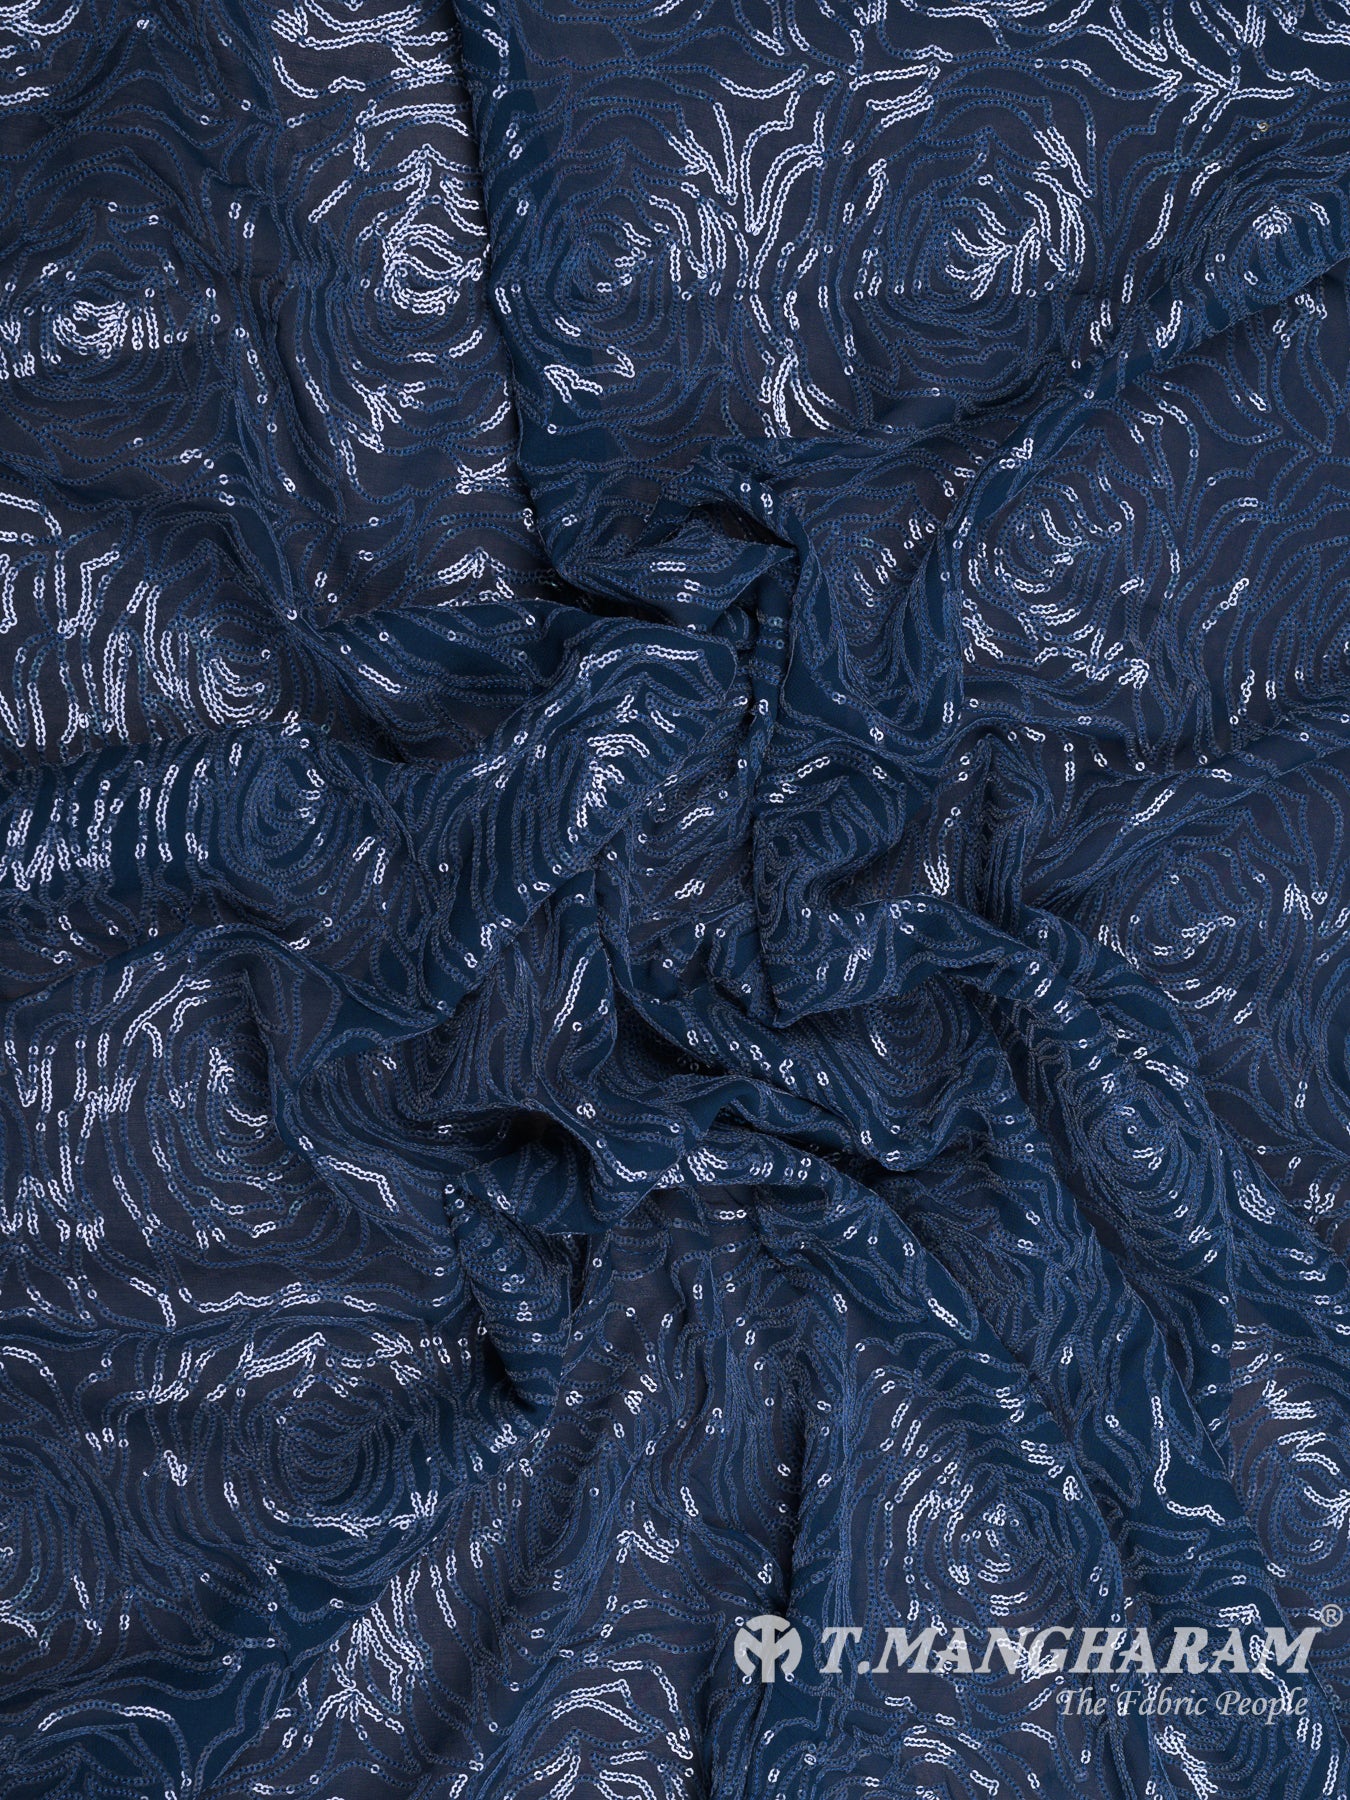 Blue Sequin Georgette Fabric - EB5753